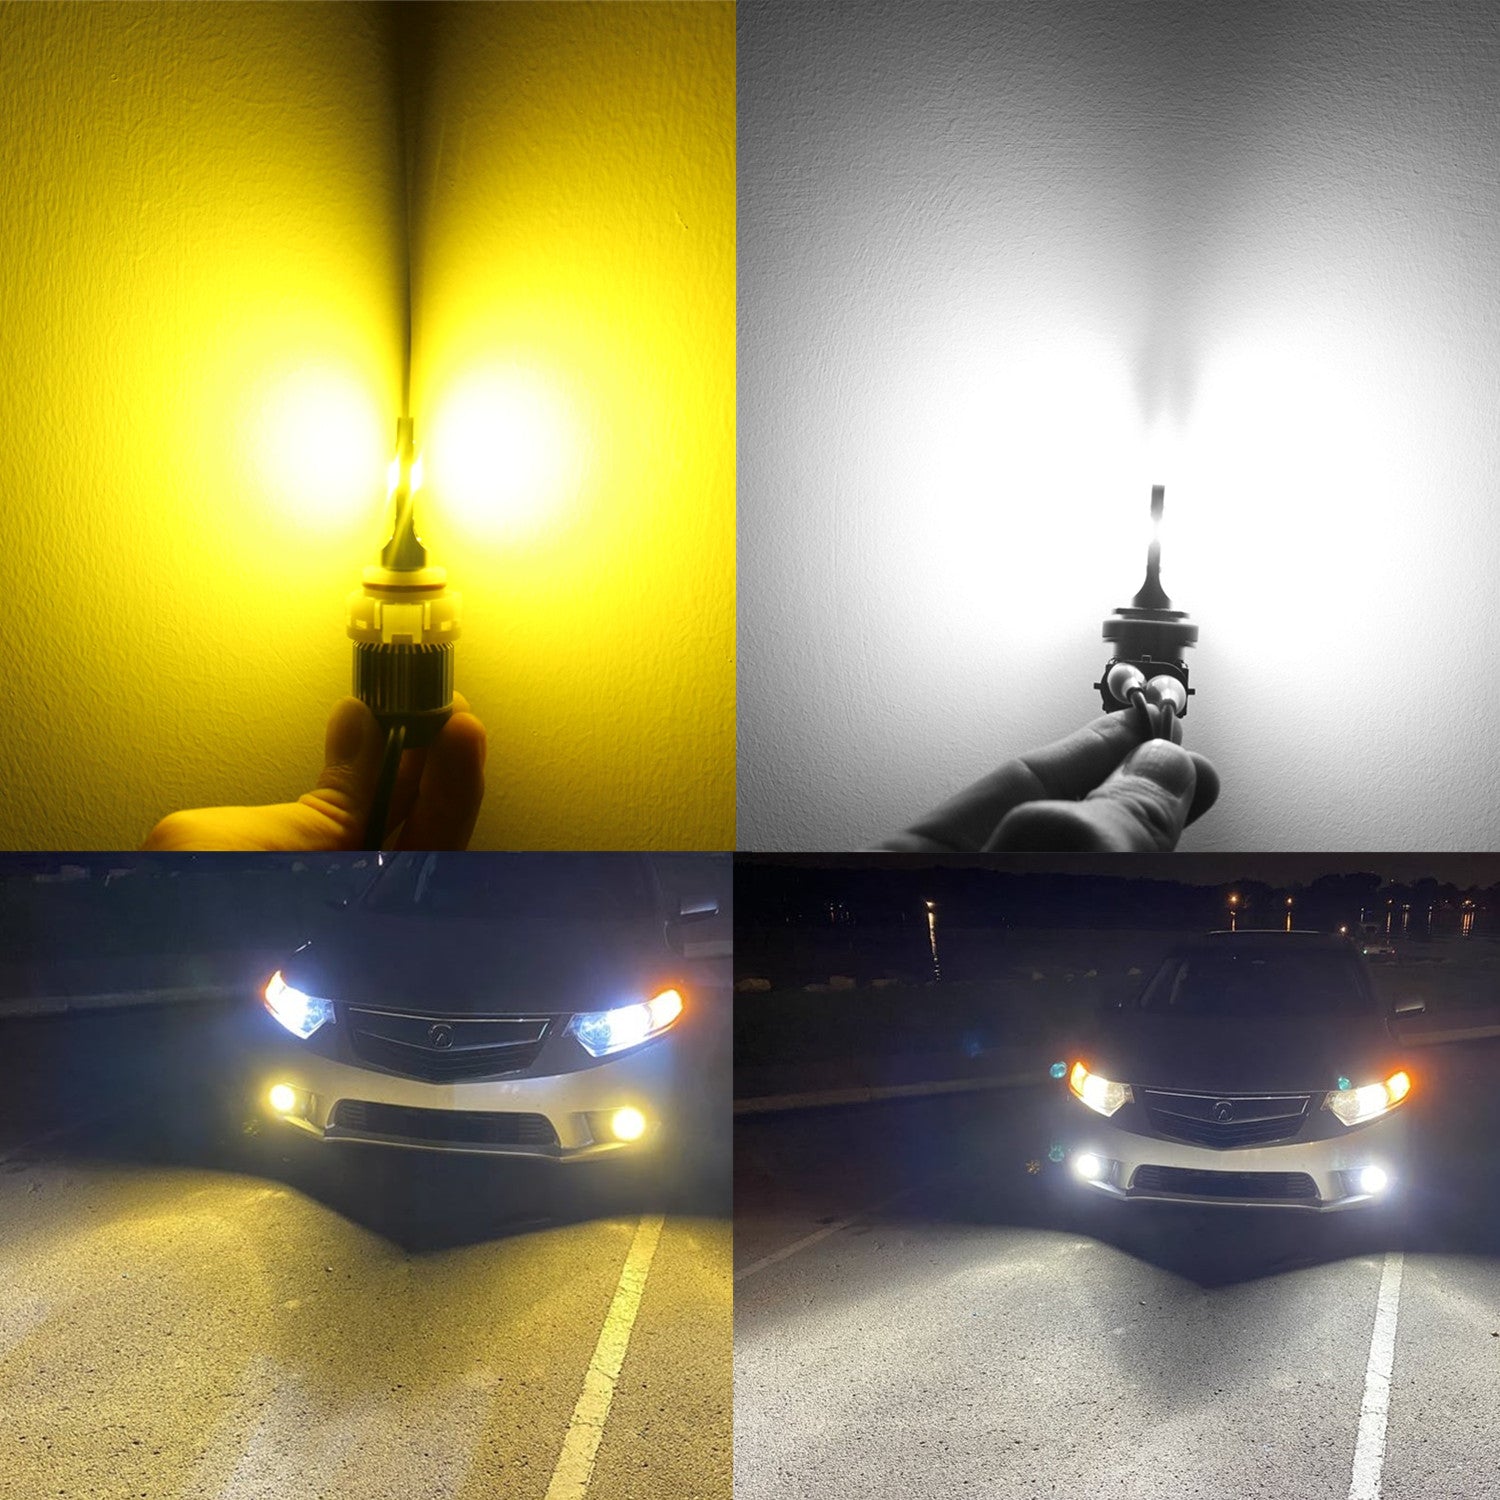 Dual Color H8 H11 LED Fog Light Bulb 6000K White/Amber Yellow Driving DRL  Lamp